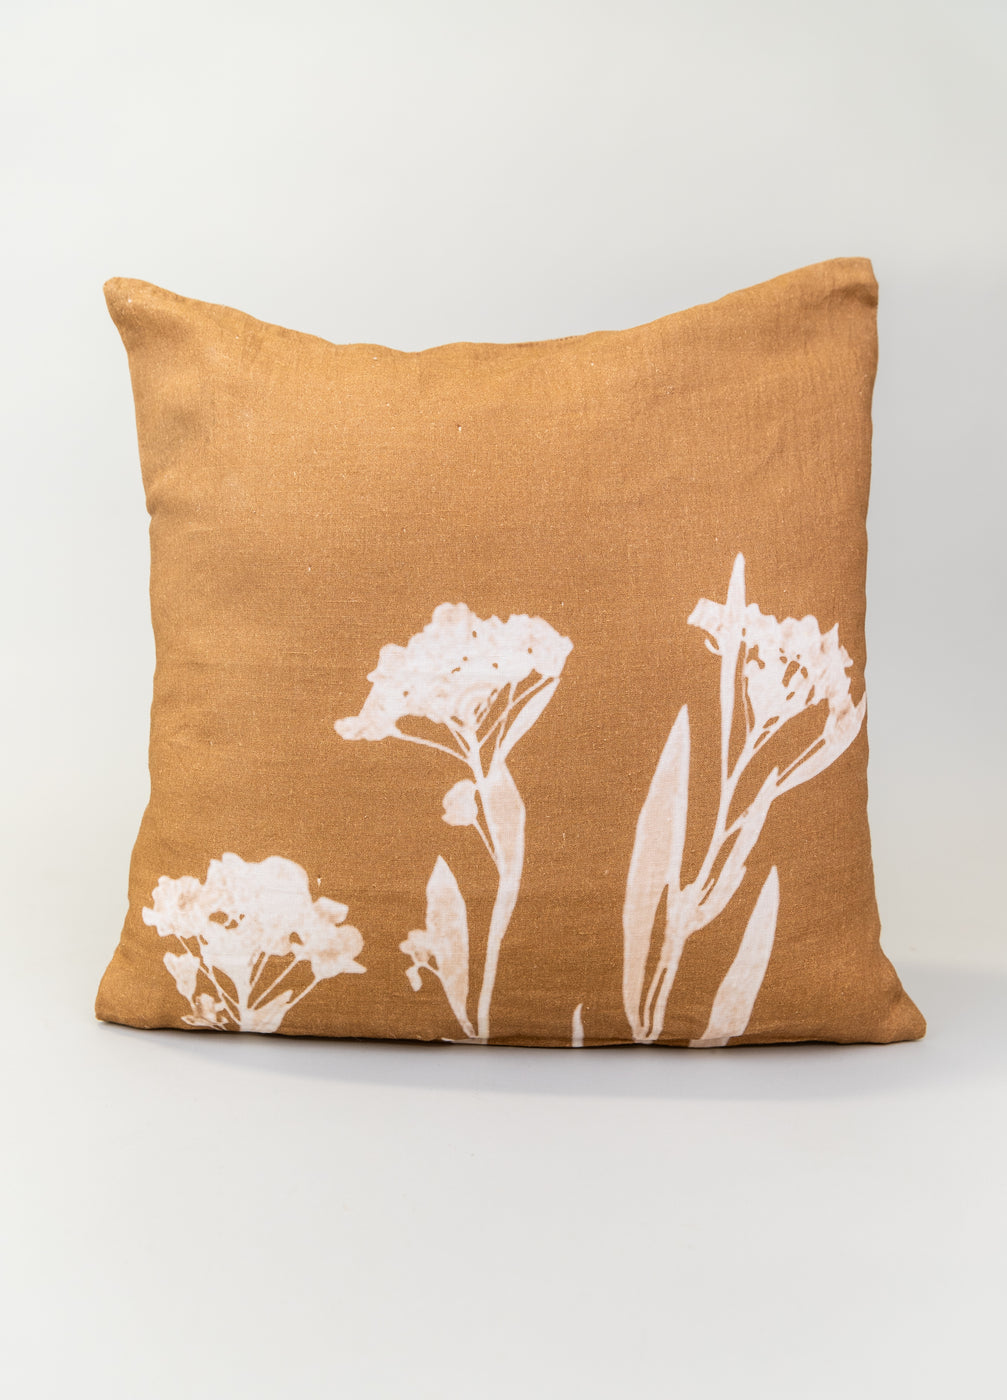 a pillow with a flower design